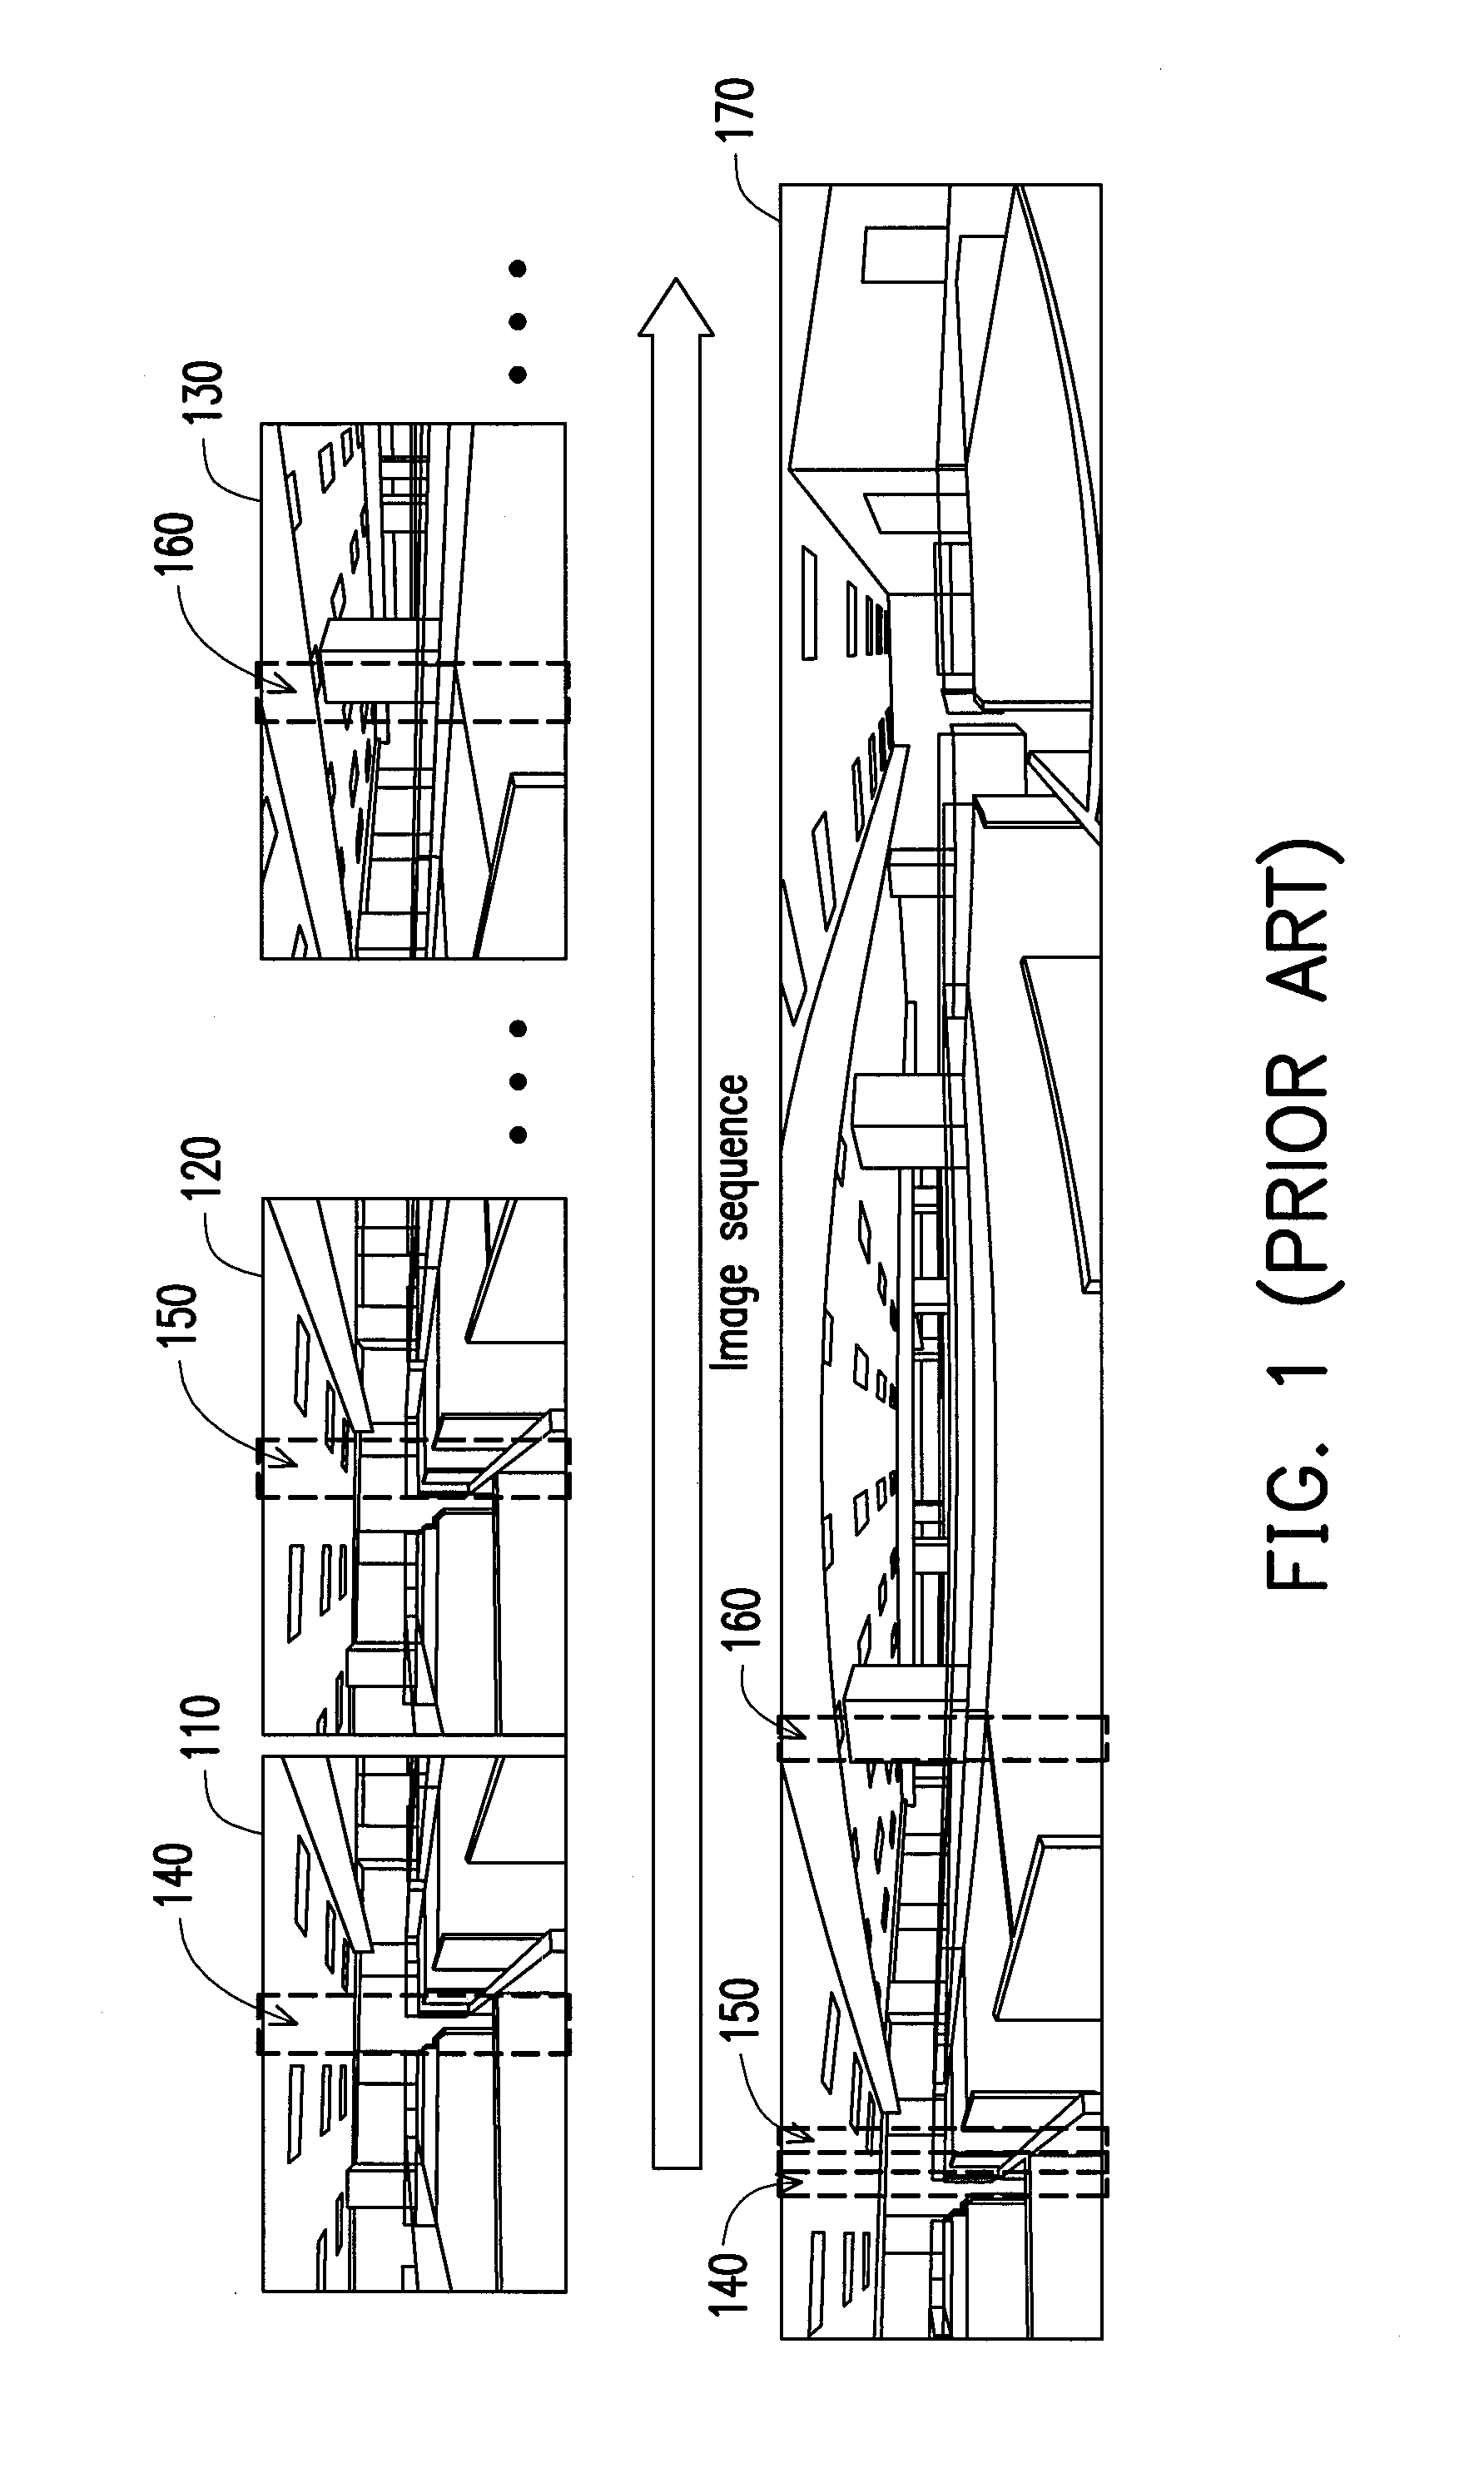 Method and apparatus for generating panorama